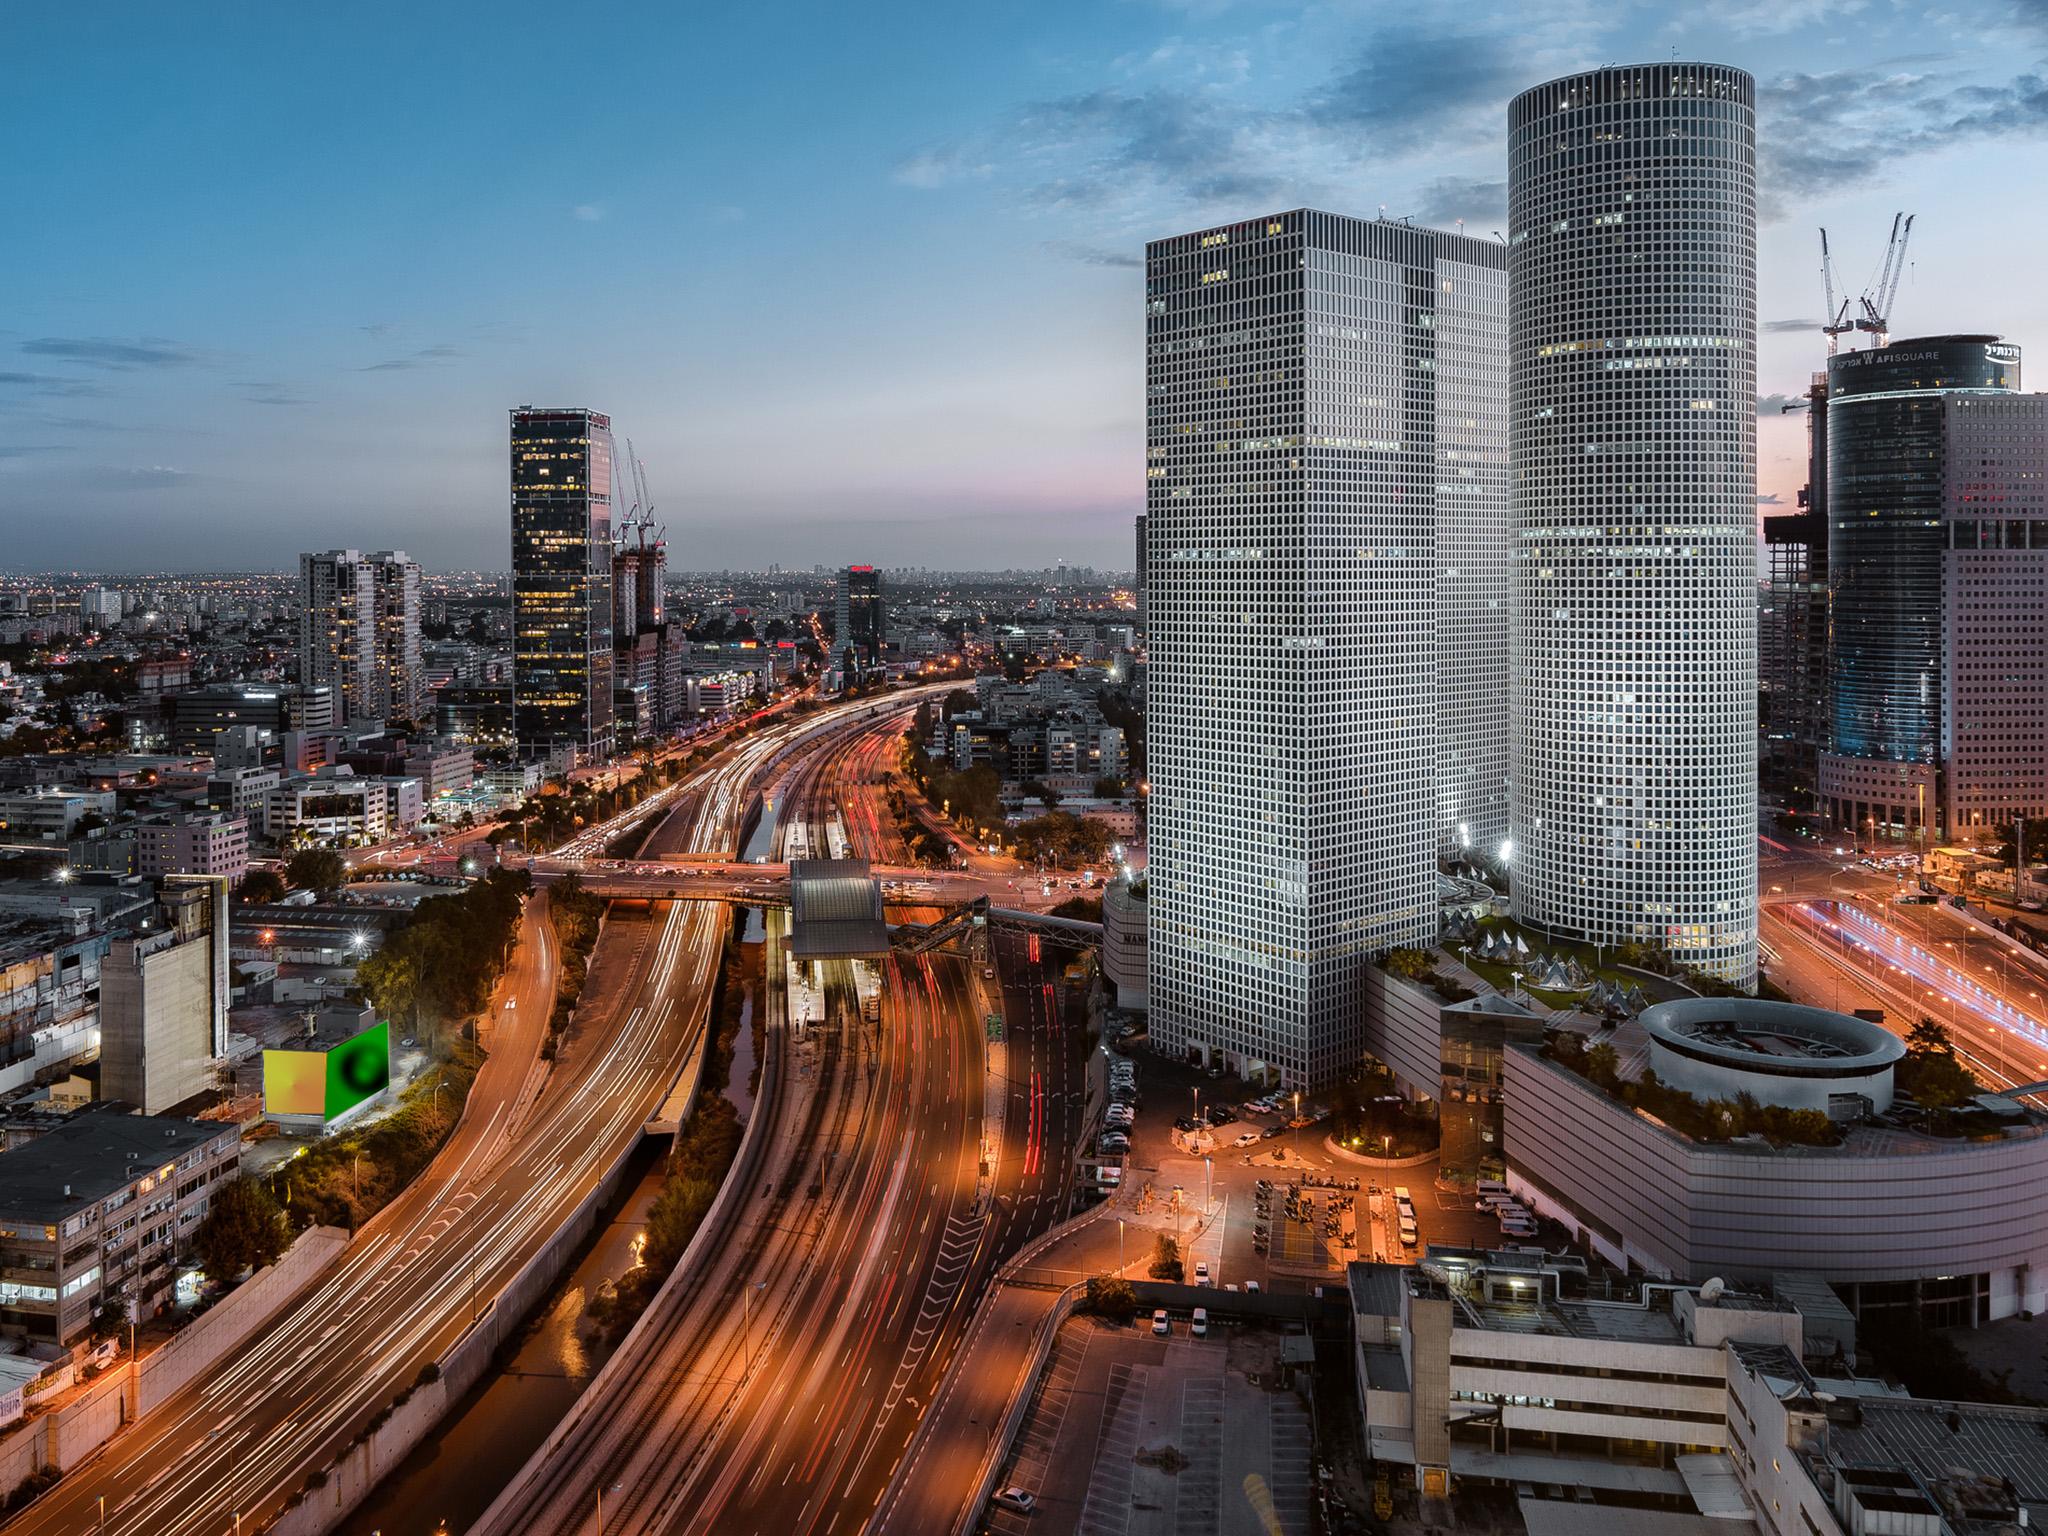 10. Tel Aviv